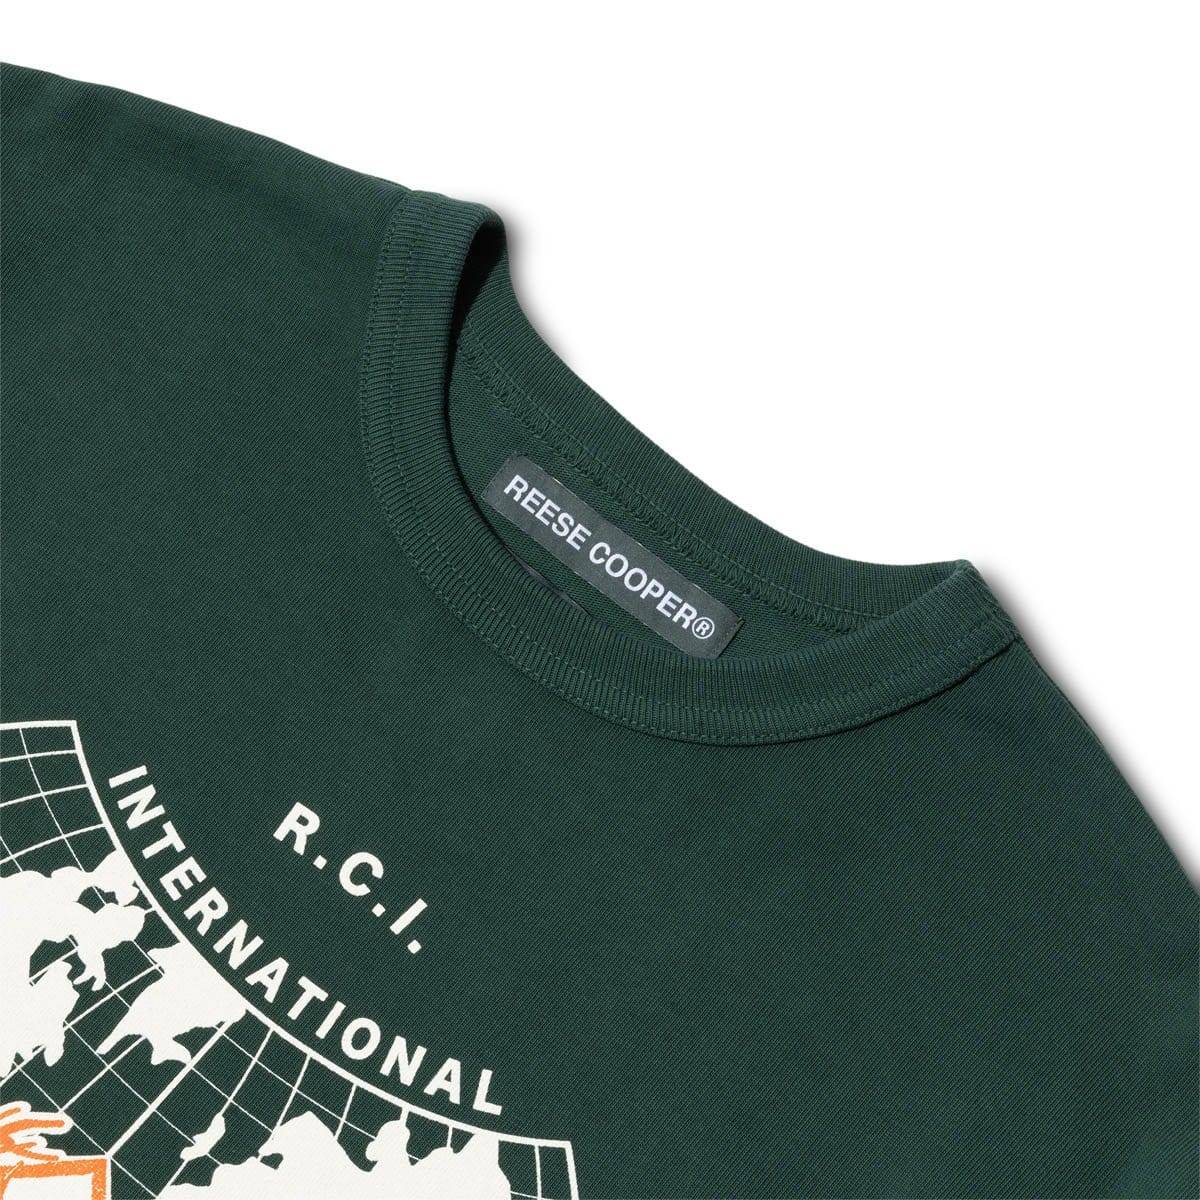 Reese Cooper T-Shirts RCI INTERNATIONAL TEE